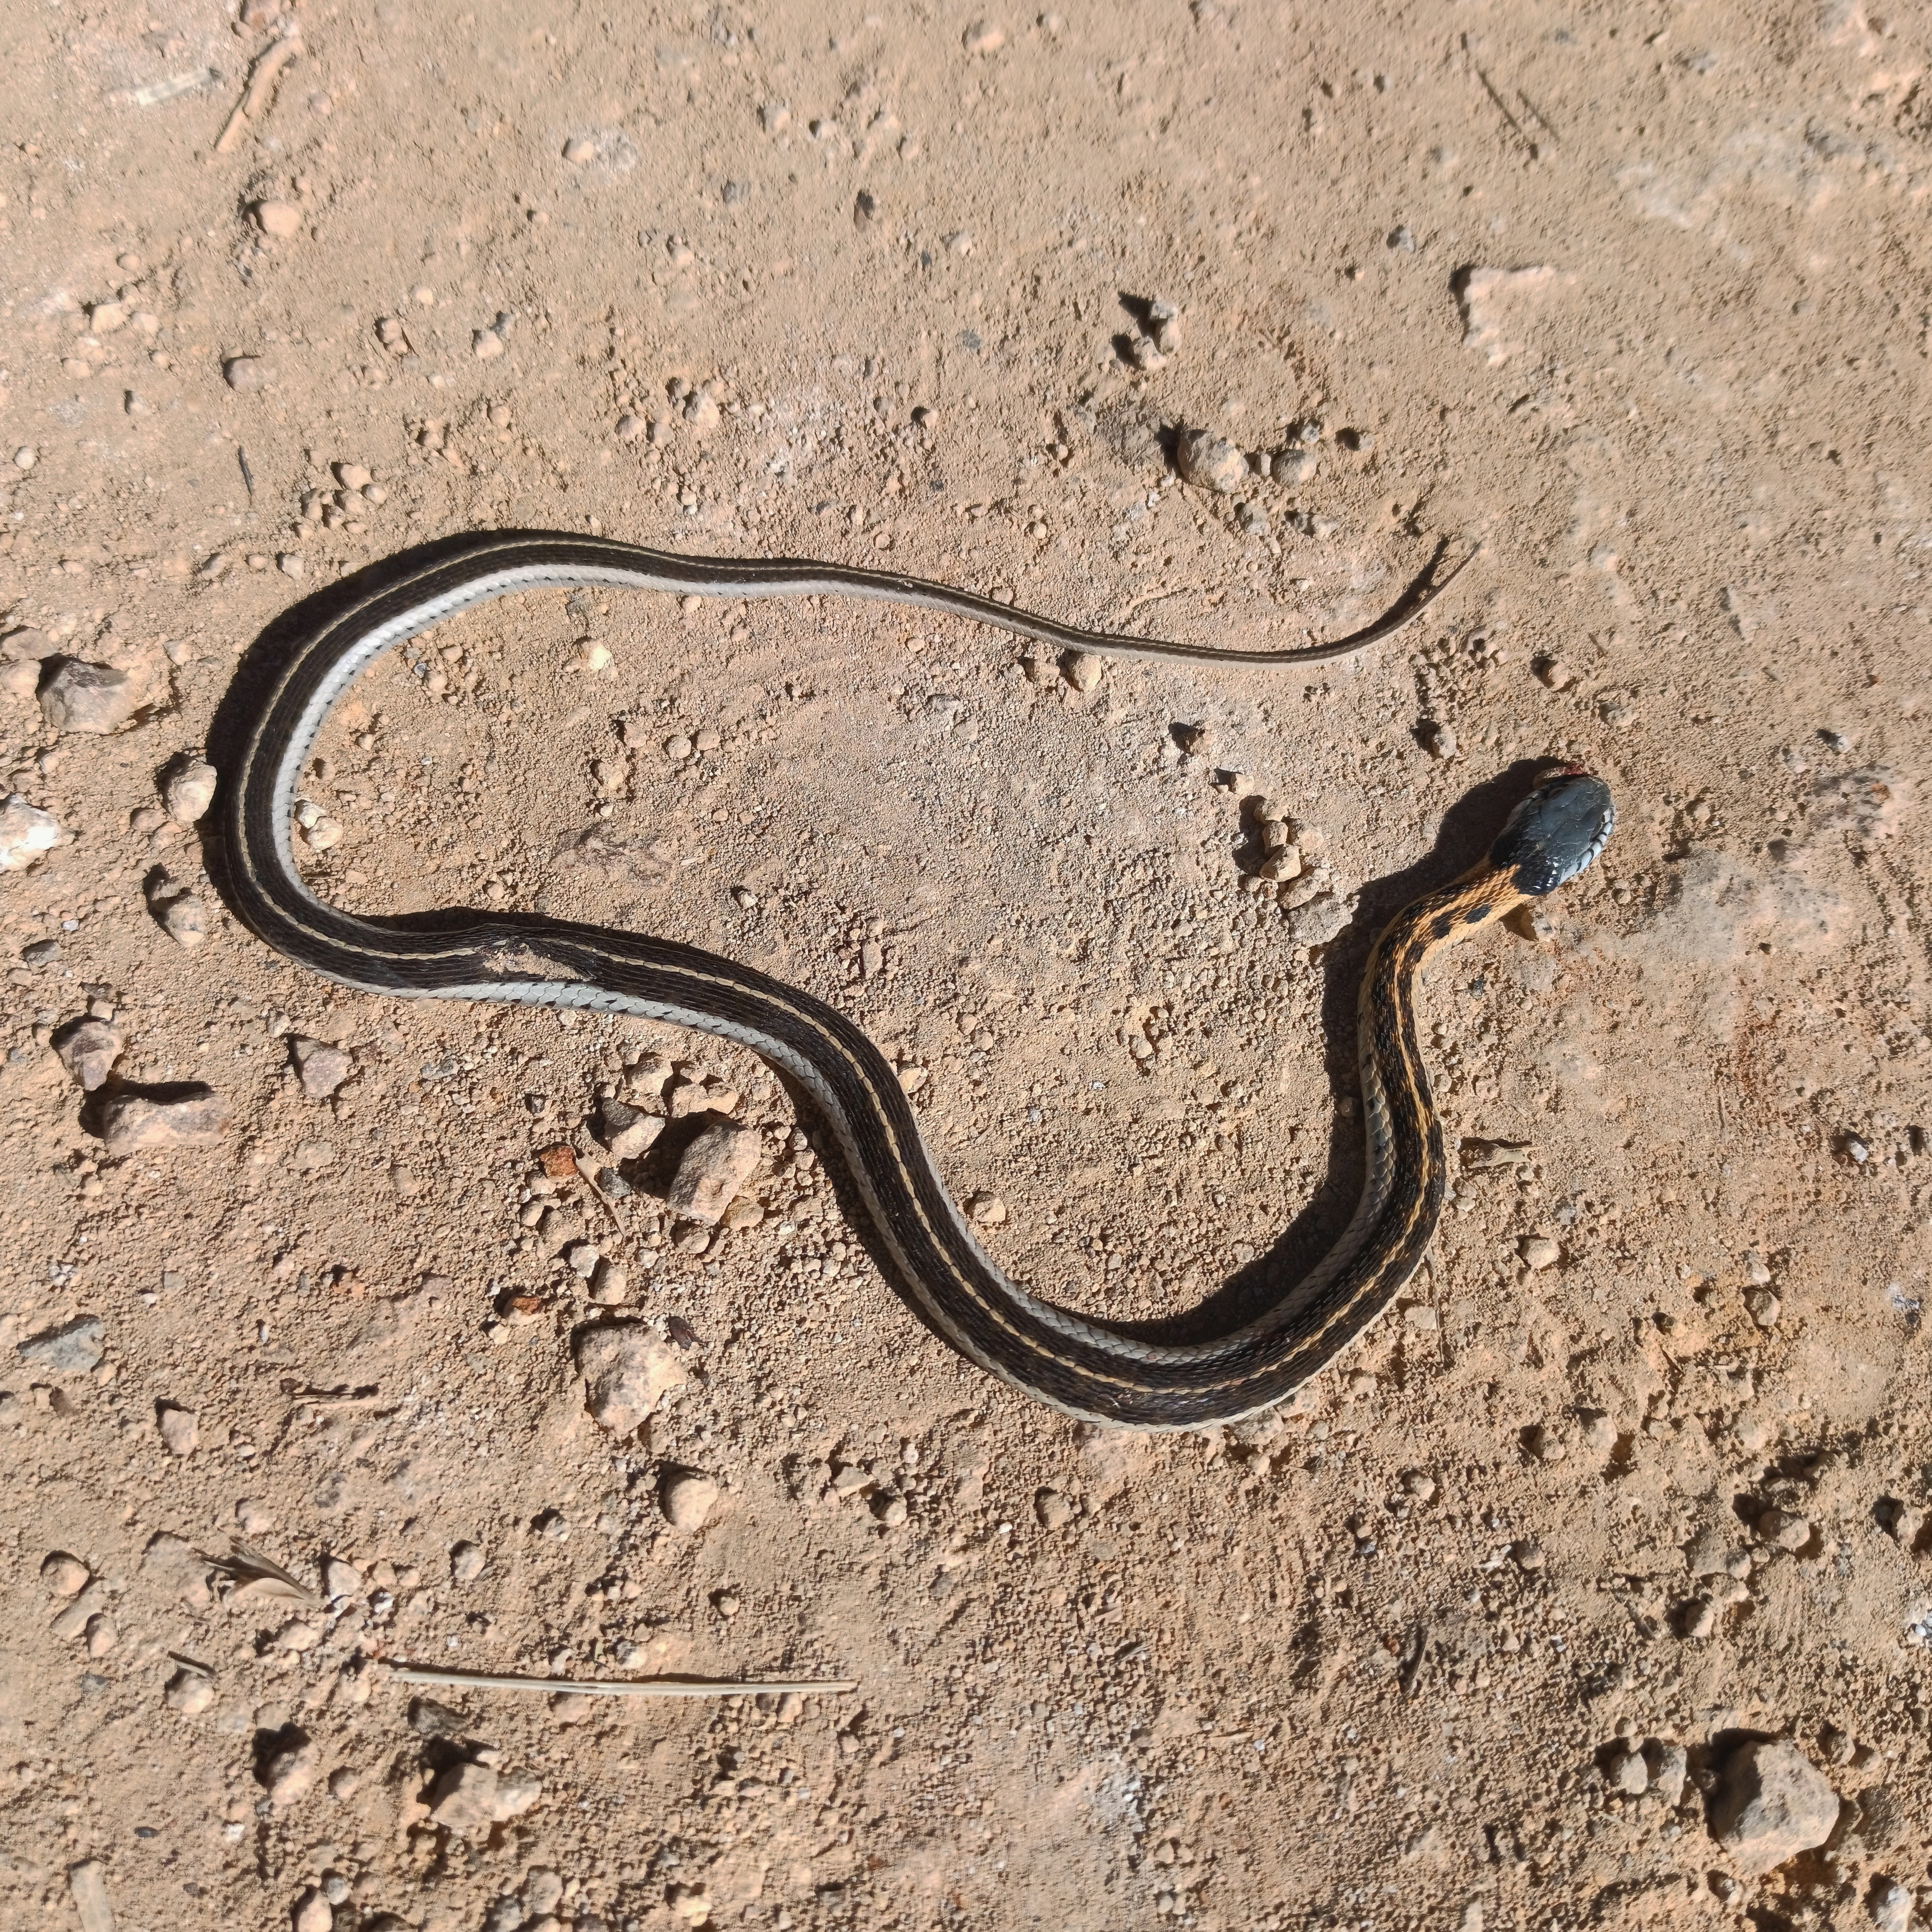 Thamnophis cyrtopsis (Family: Natricidae). Common name: blackneck garter snake.